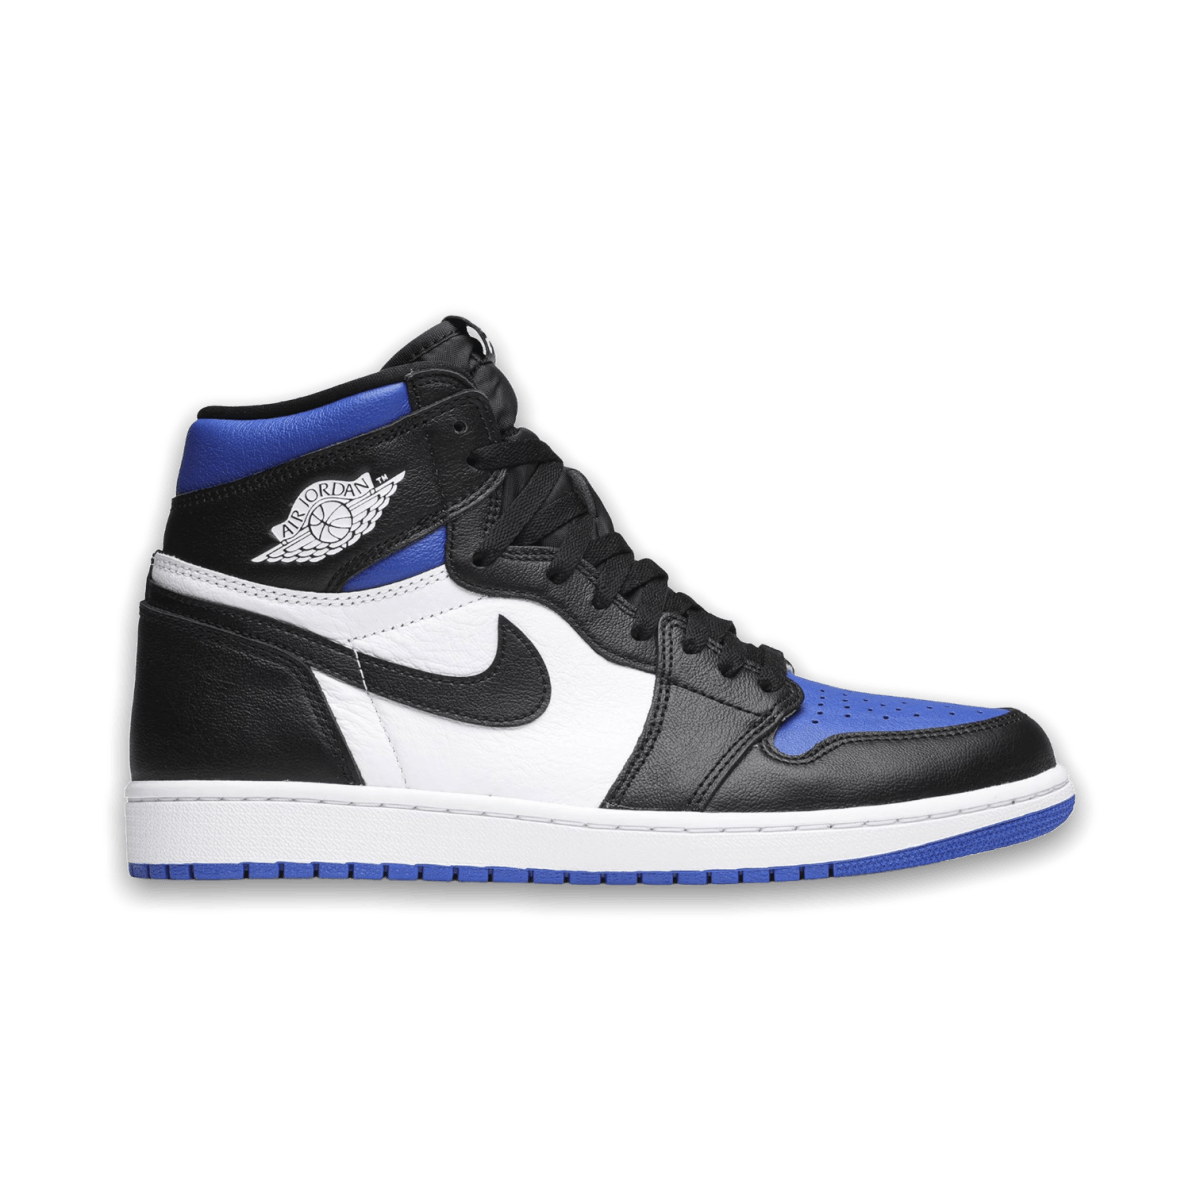 Jordan 1 Retro High OG 'Royal Toe' - High Sneaker - Jawns on Fire Sneakers & Streetwear